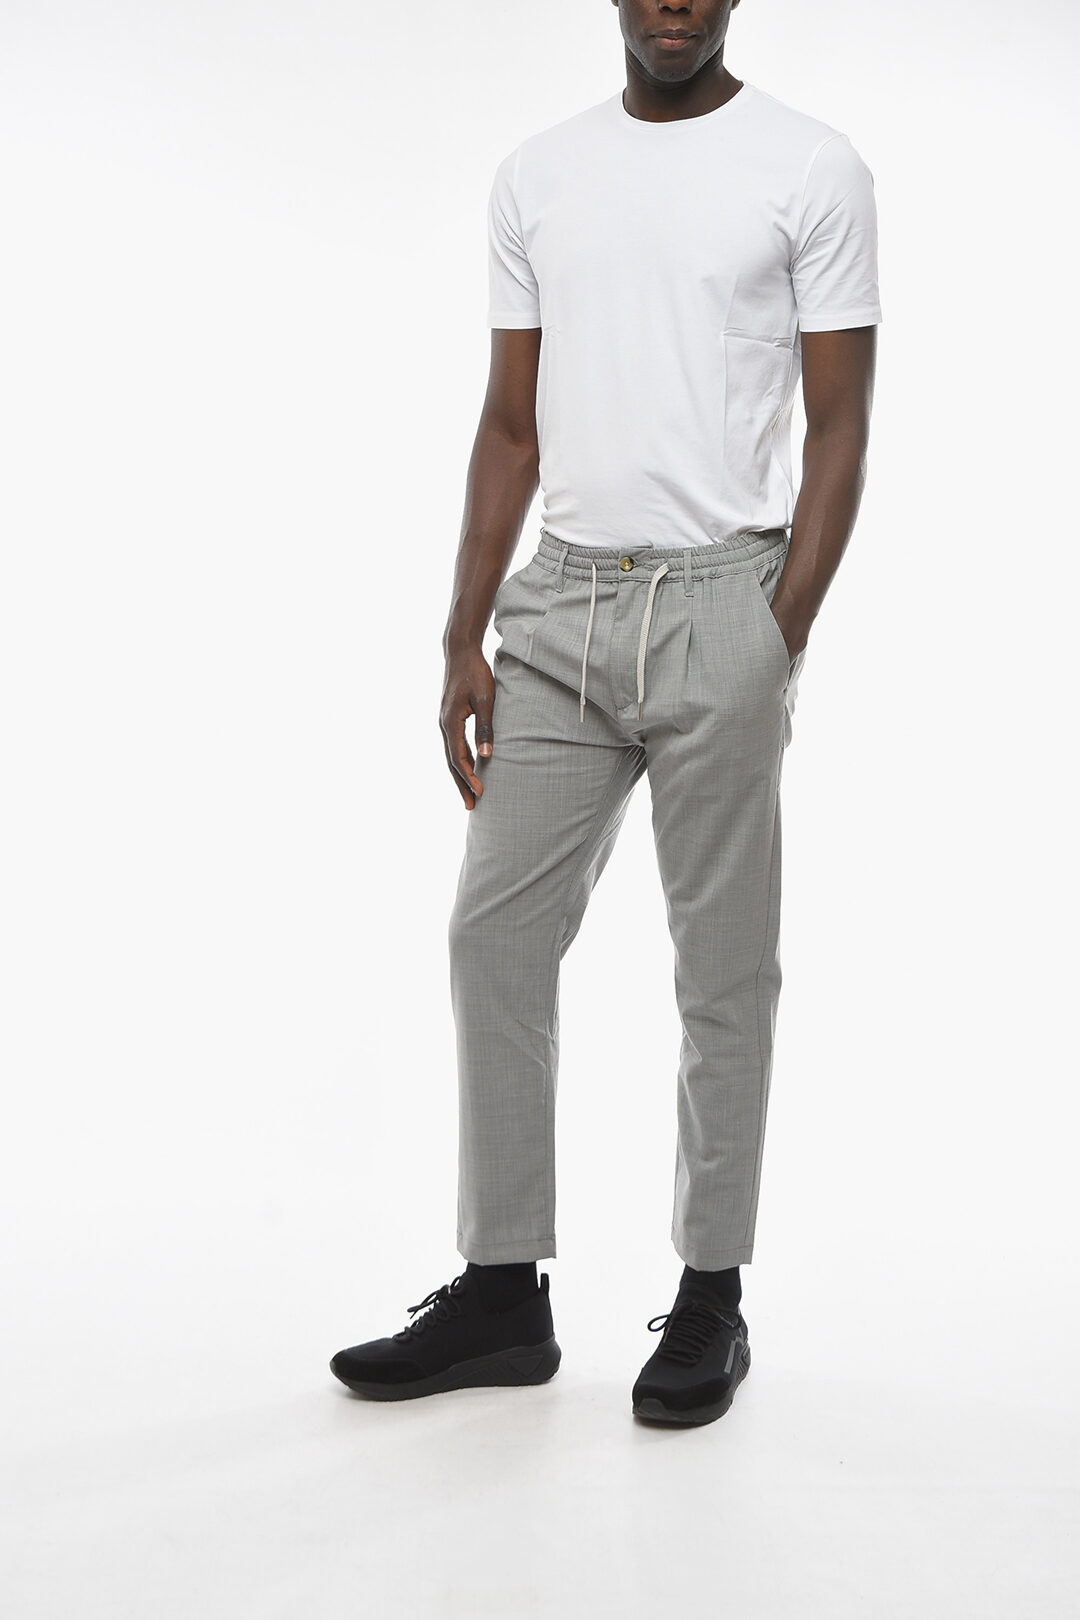 Buy MAX Men's Slim Casual Pants (TFBKBSP2301CTNAVY_Navy at Amazon.in